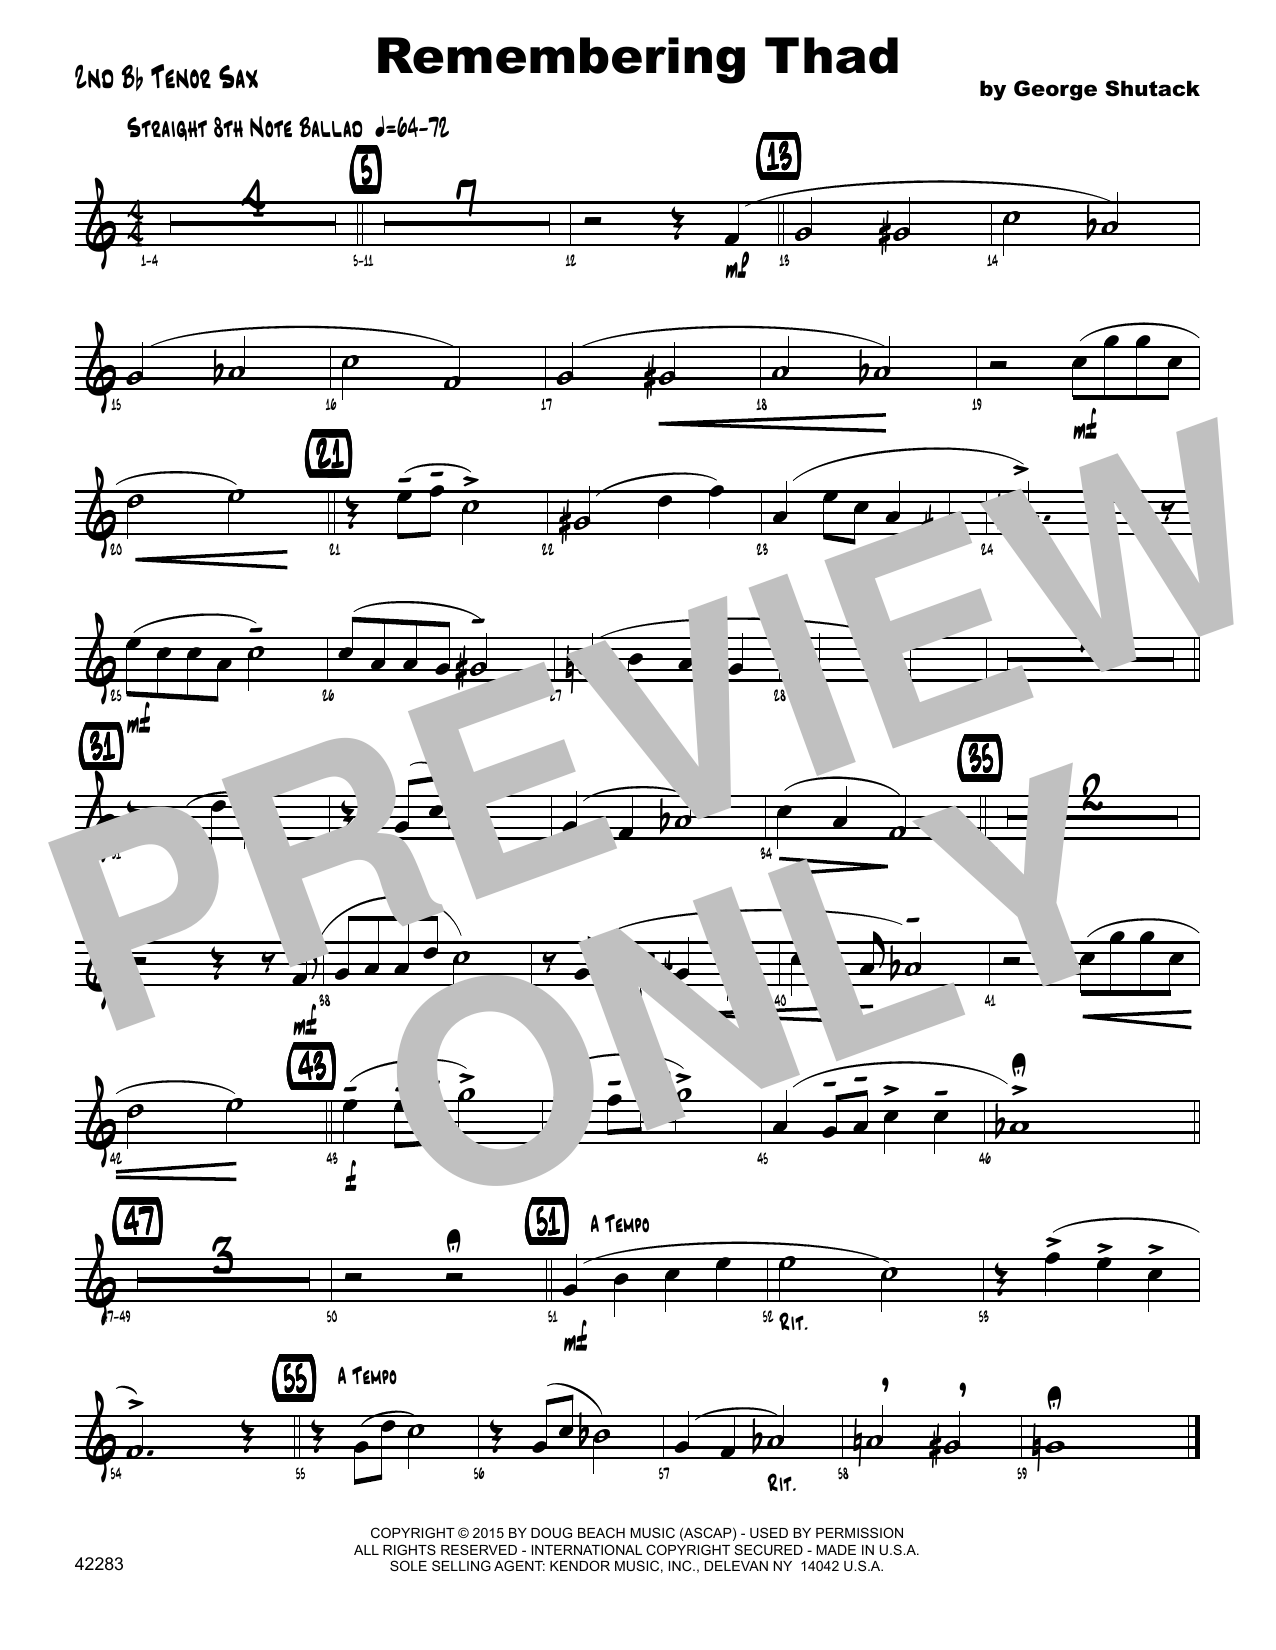 Download George Shutack Remembering Thad - 2nd Bb Tenor Saxopho Sheet Music